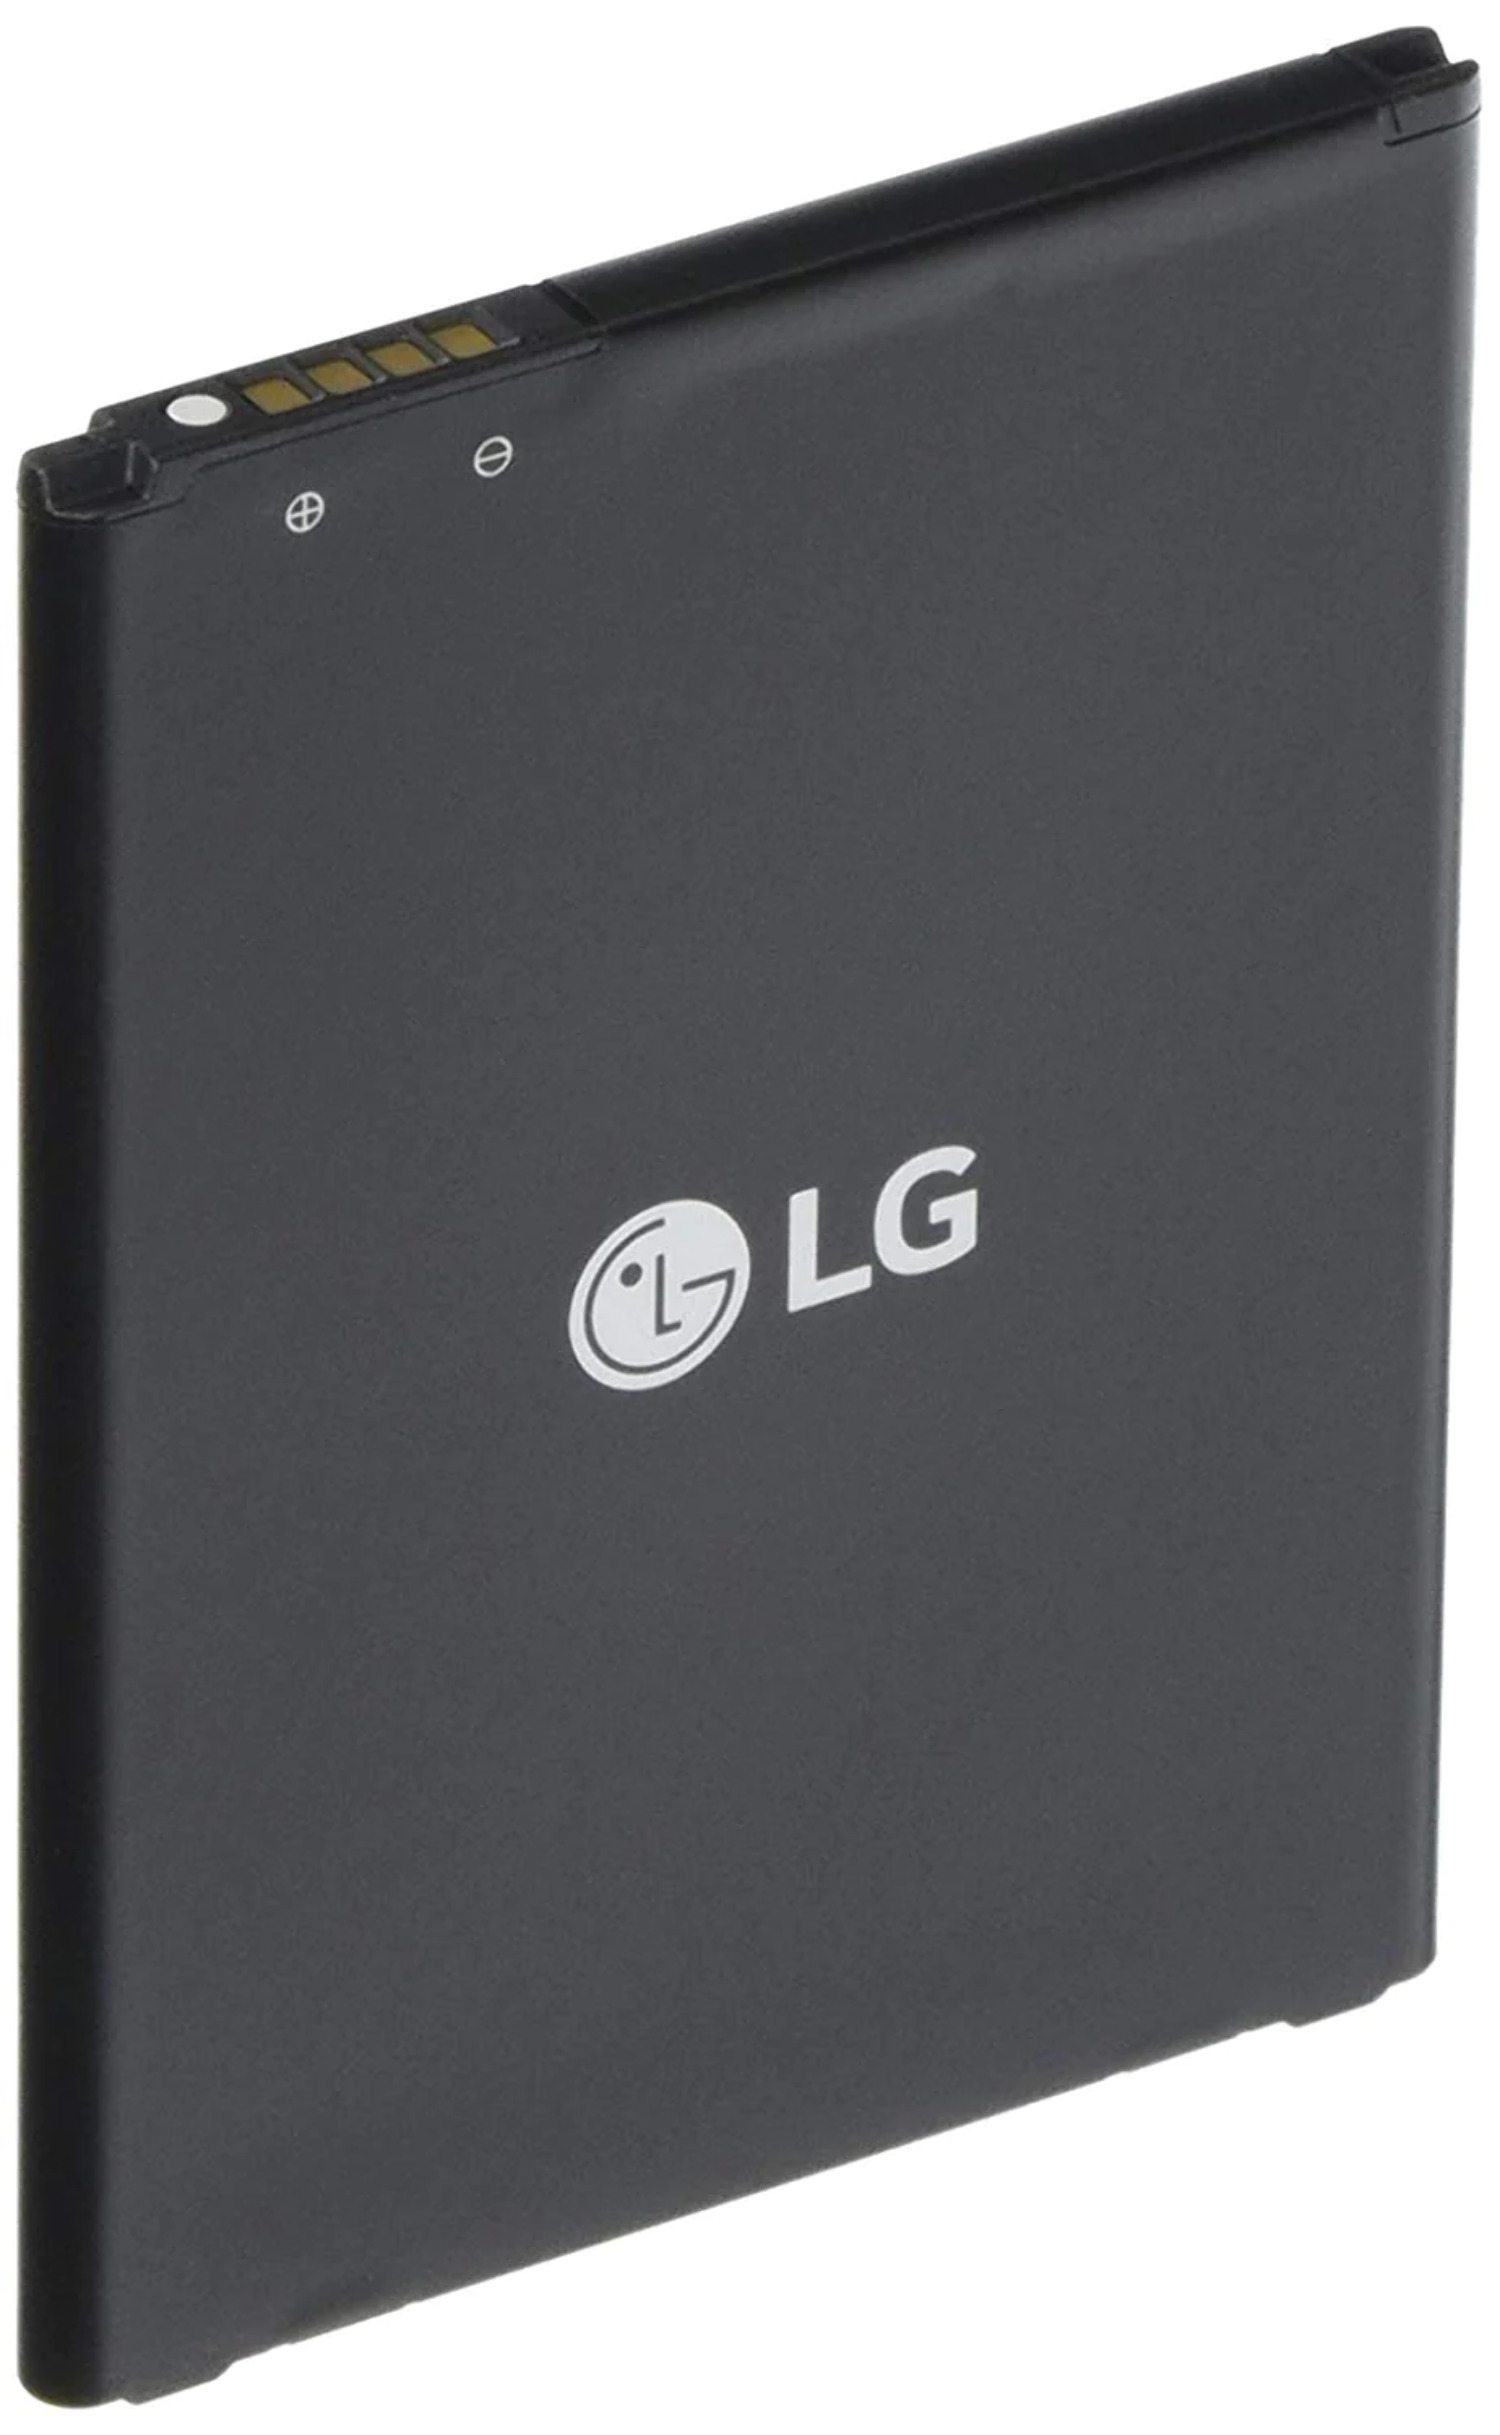 Genuine OEM Original LG Spare Extra Regular Standard Li-Ion Battery 3000mAh BL-45B1F / BAK-110 For LG V10 Phone (1x LG Battery) - image 1 of 1